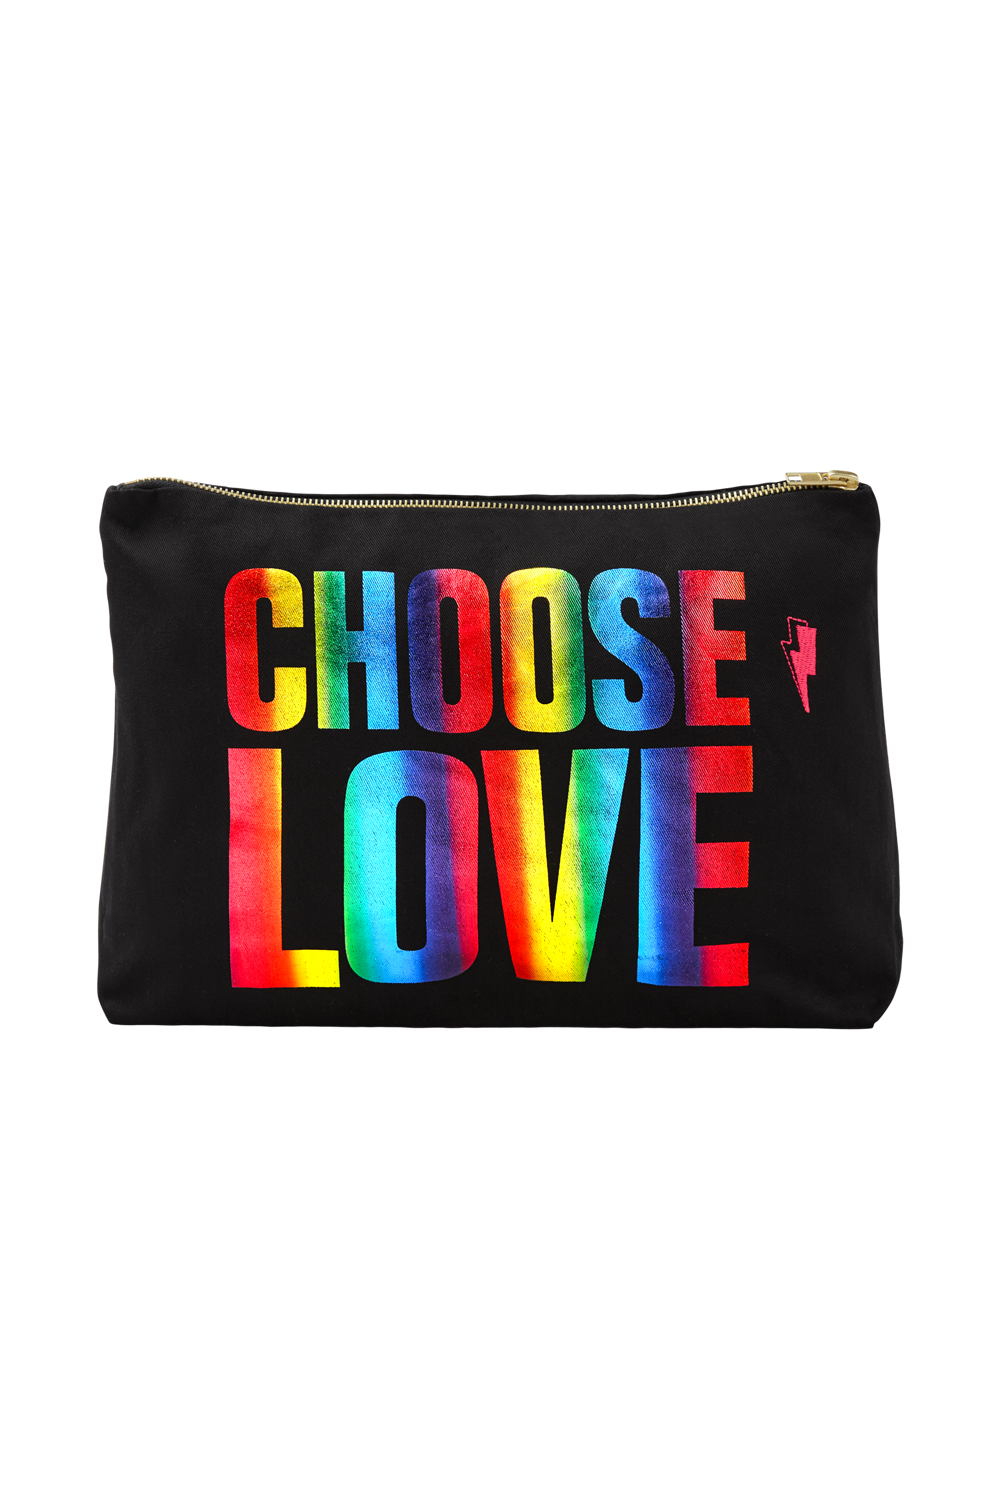 CHOOSE LOVE Black with Metallic Rainbow Foil Swag Bag